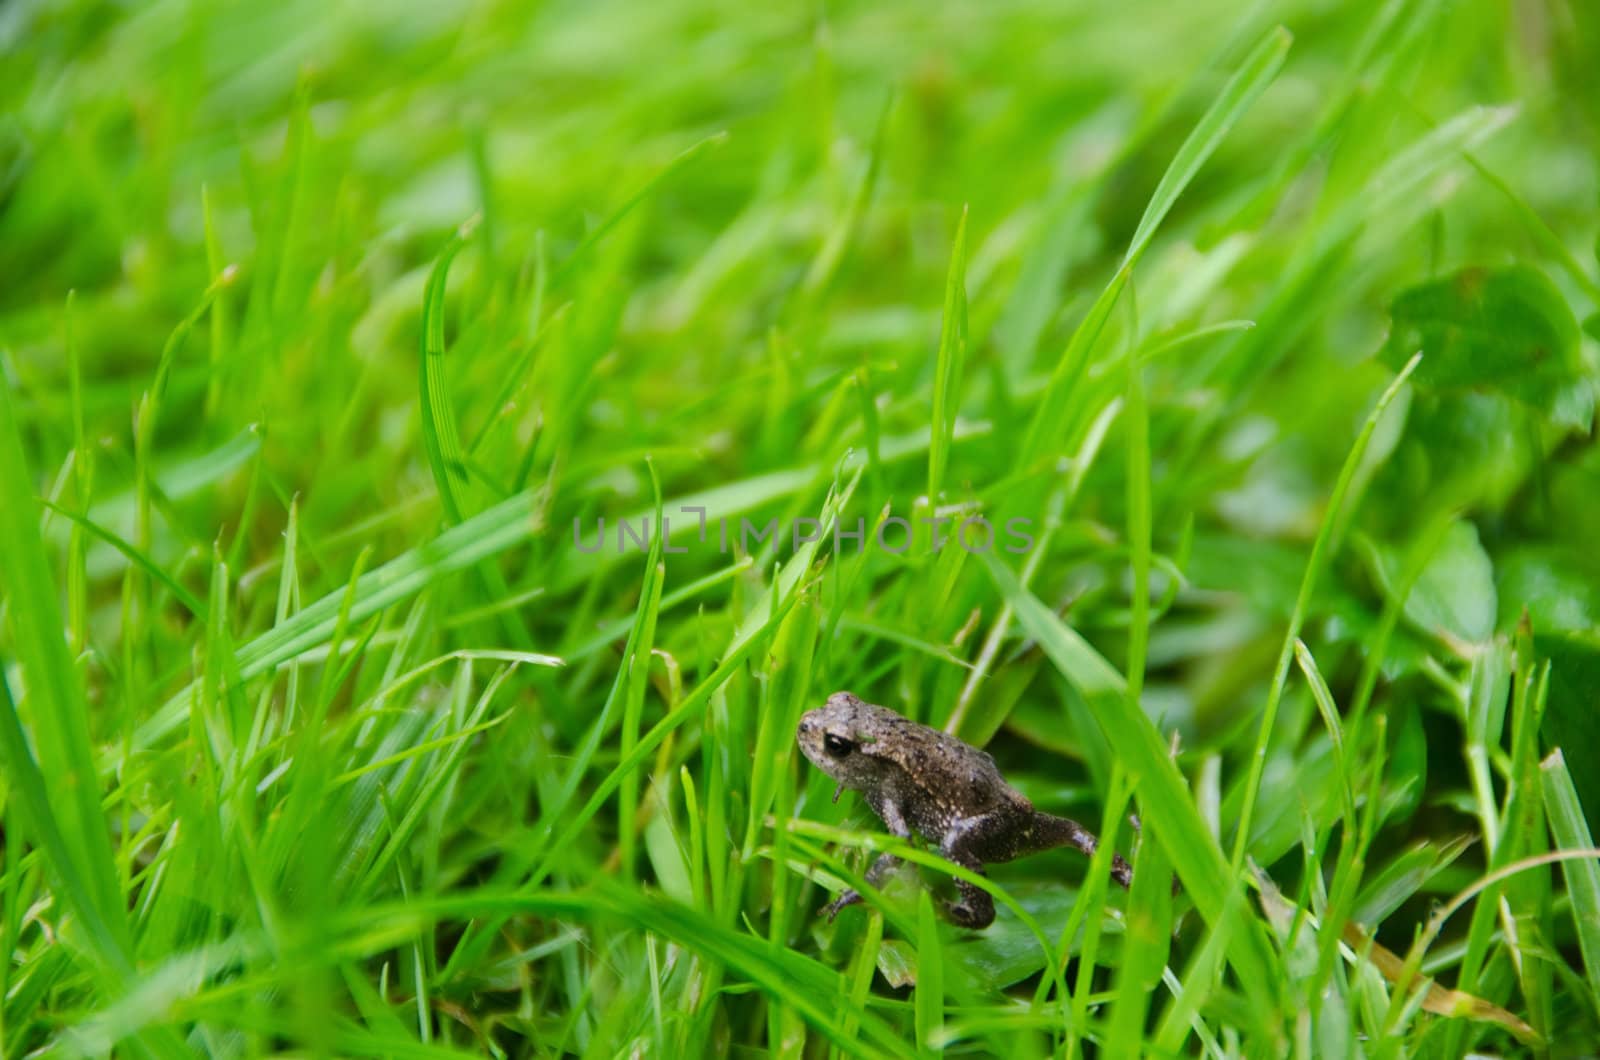 freshly metamorphosed common toad, Bufo bufo, in grass